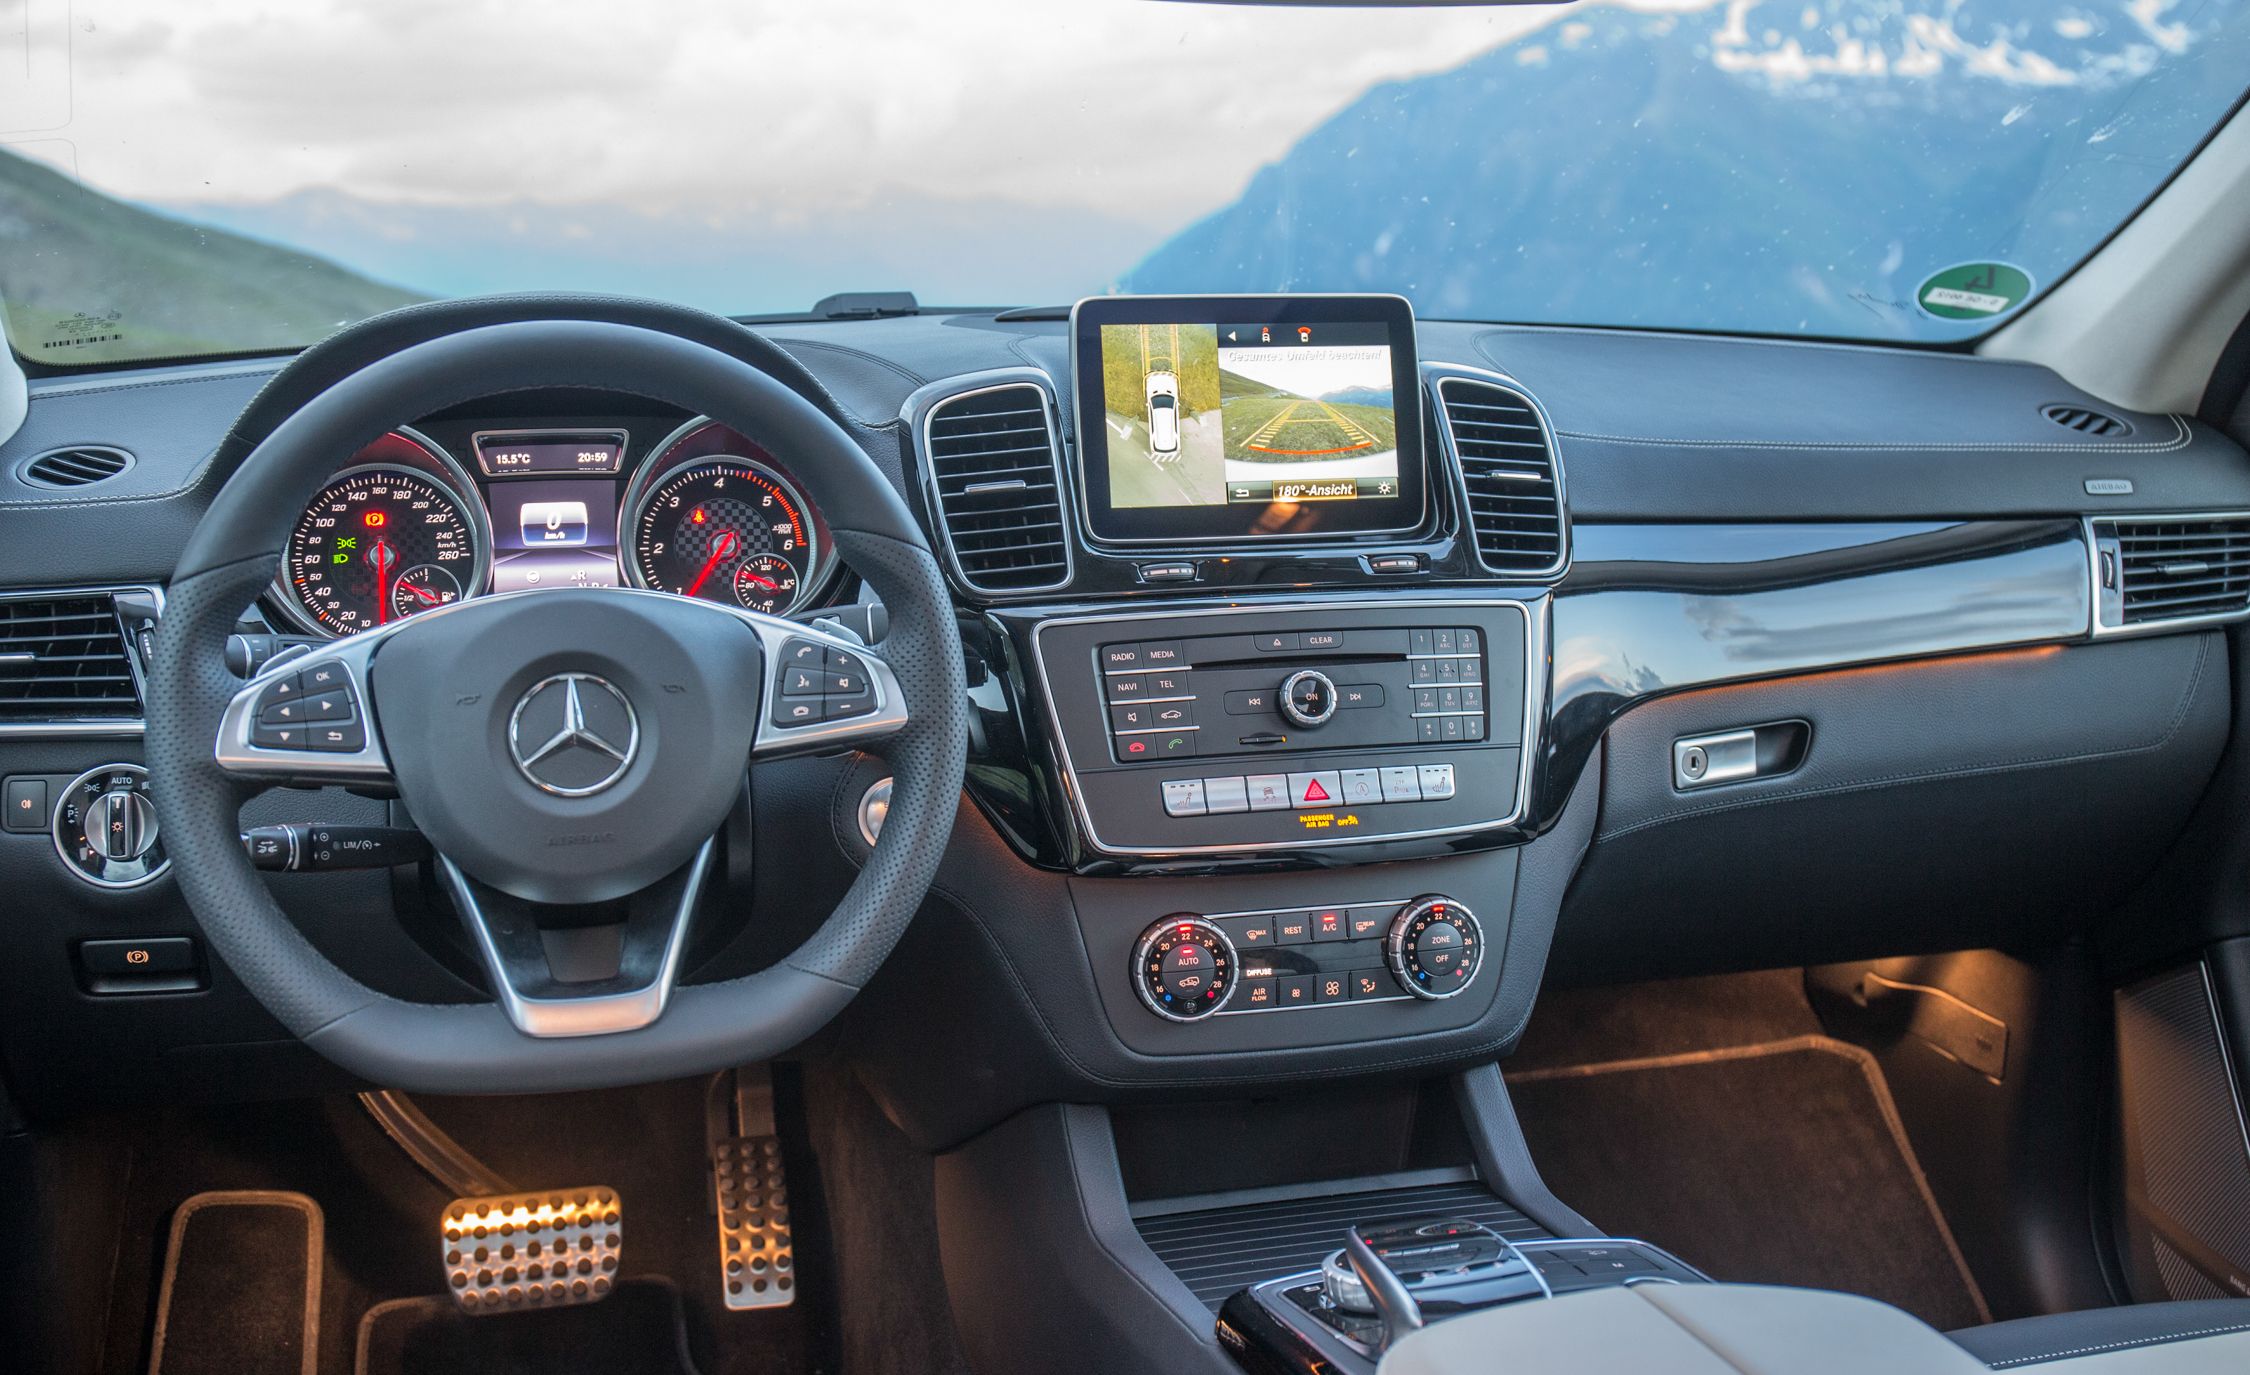 2017 MercedesBenz GLE Reliability  Consumer Reports